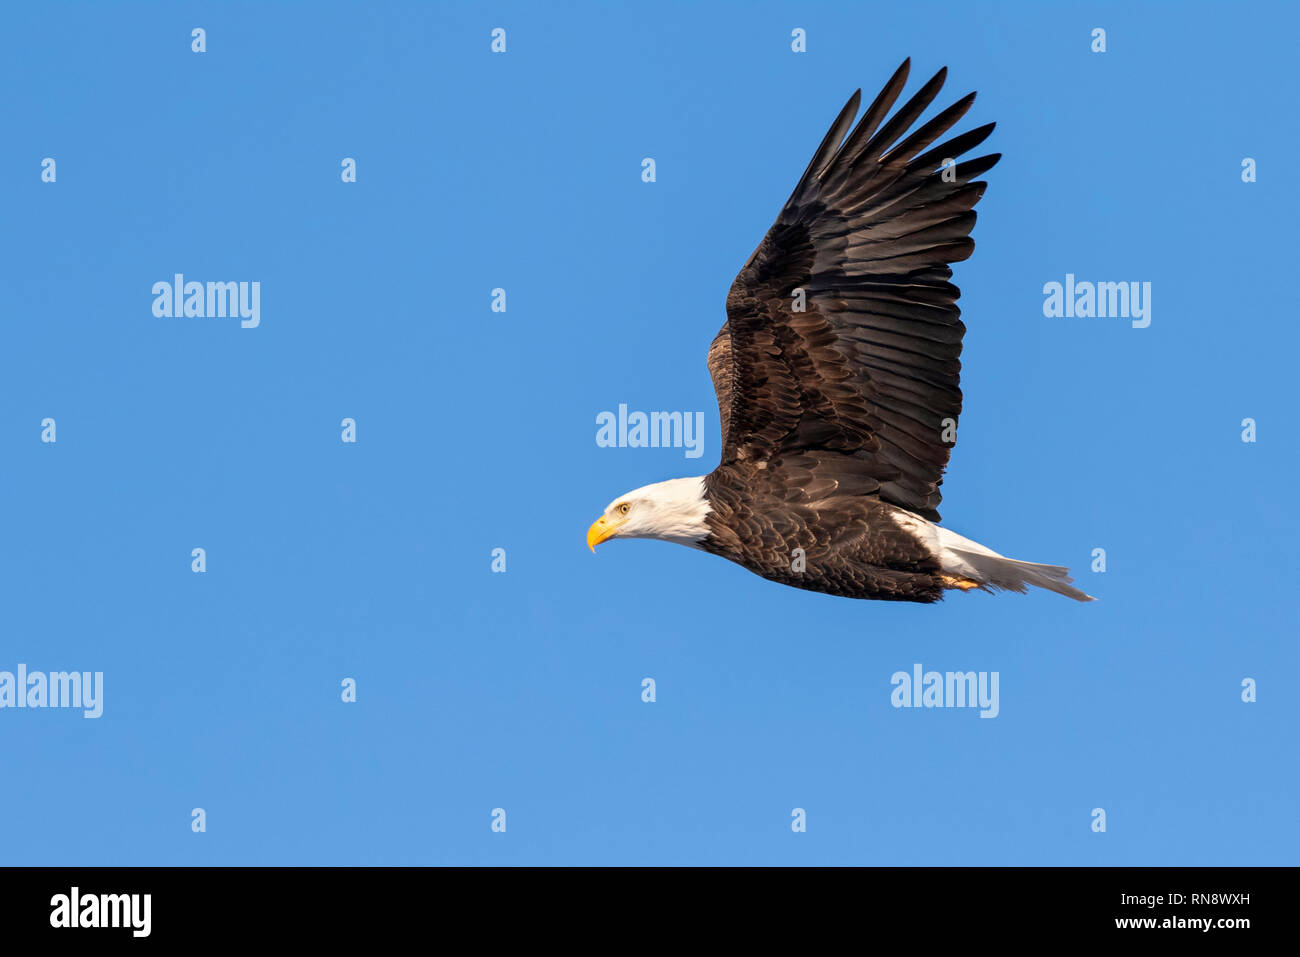 Bald eagle (Haliaeetus leucocephalus) flying in blue sky, Iowa, USA Stock Photo